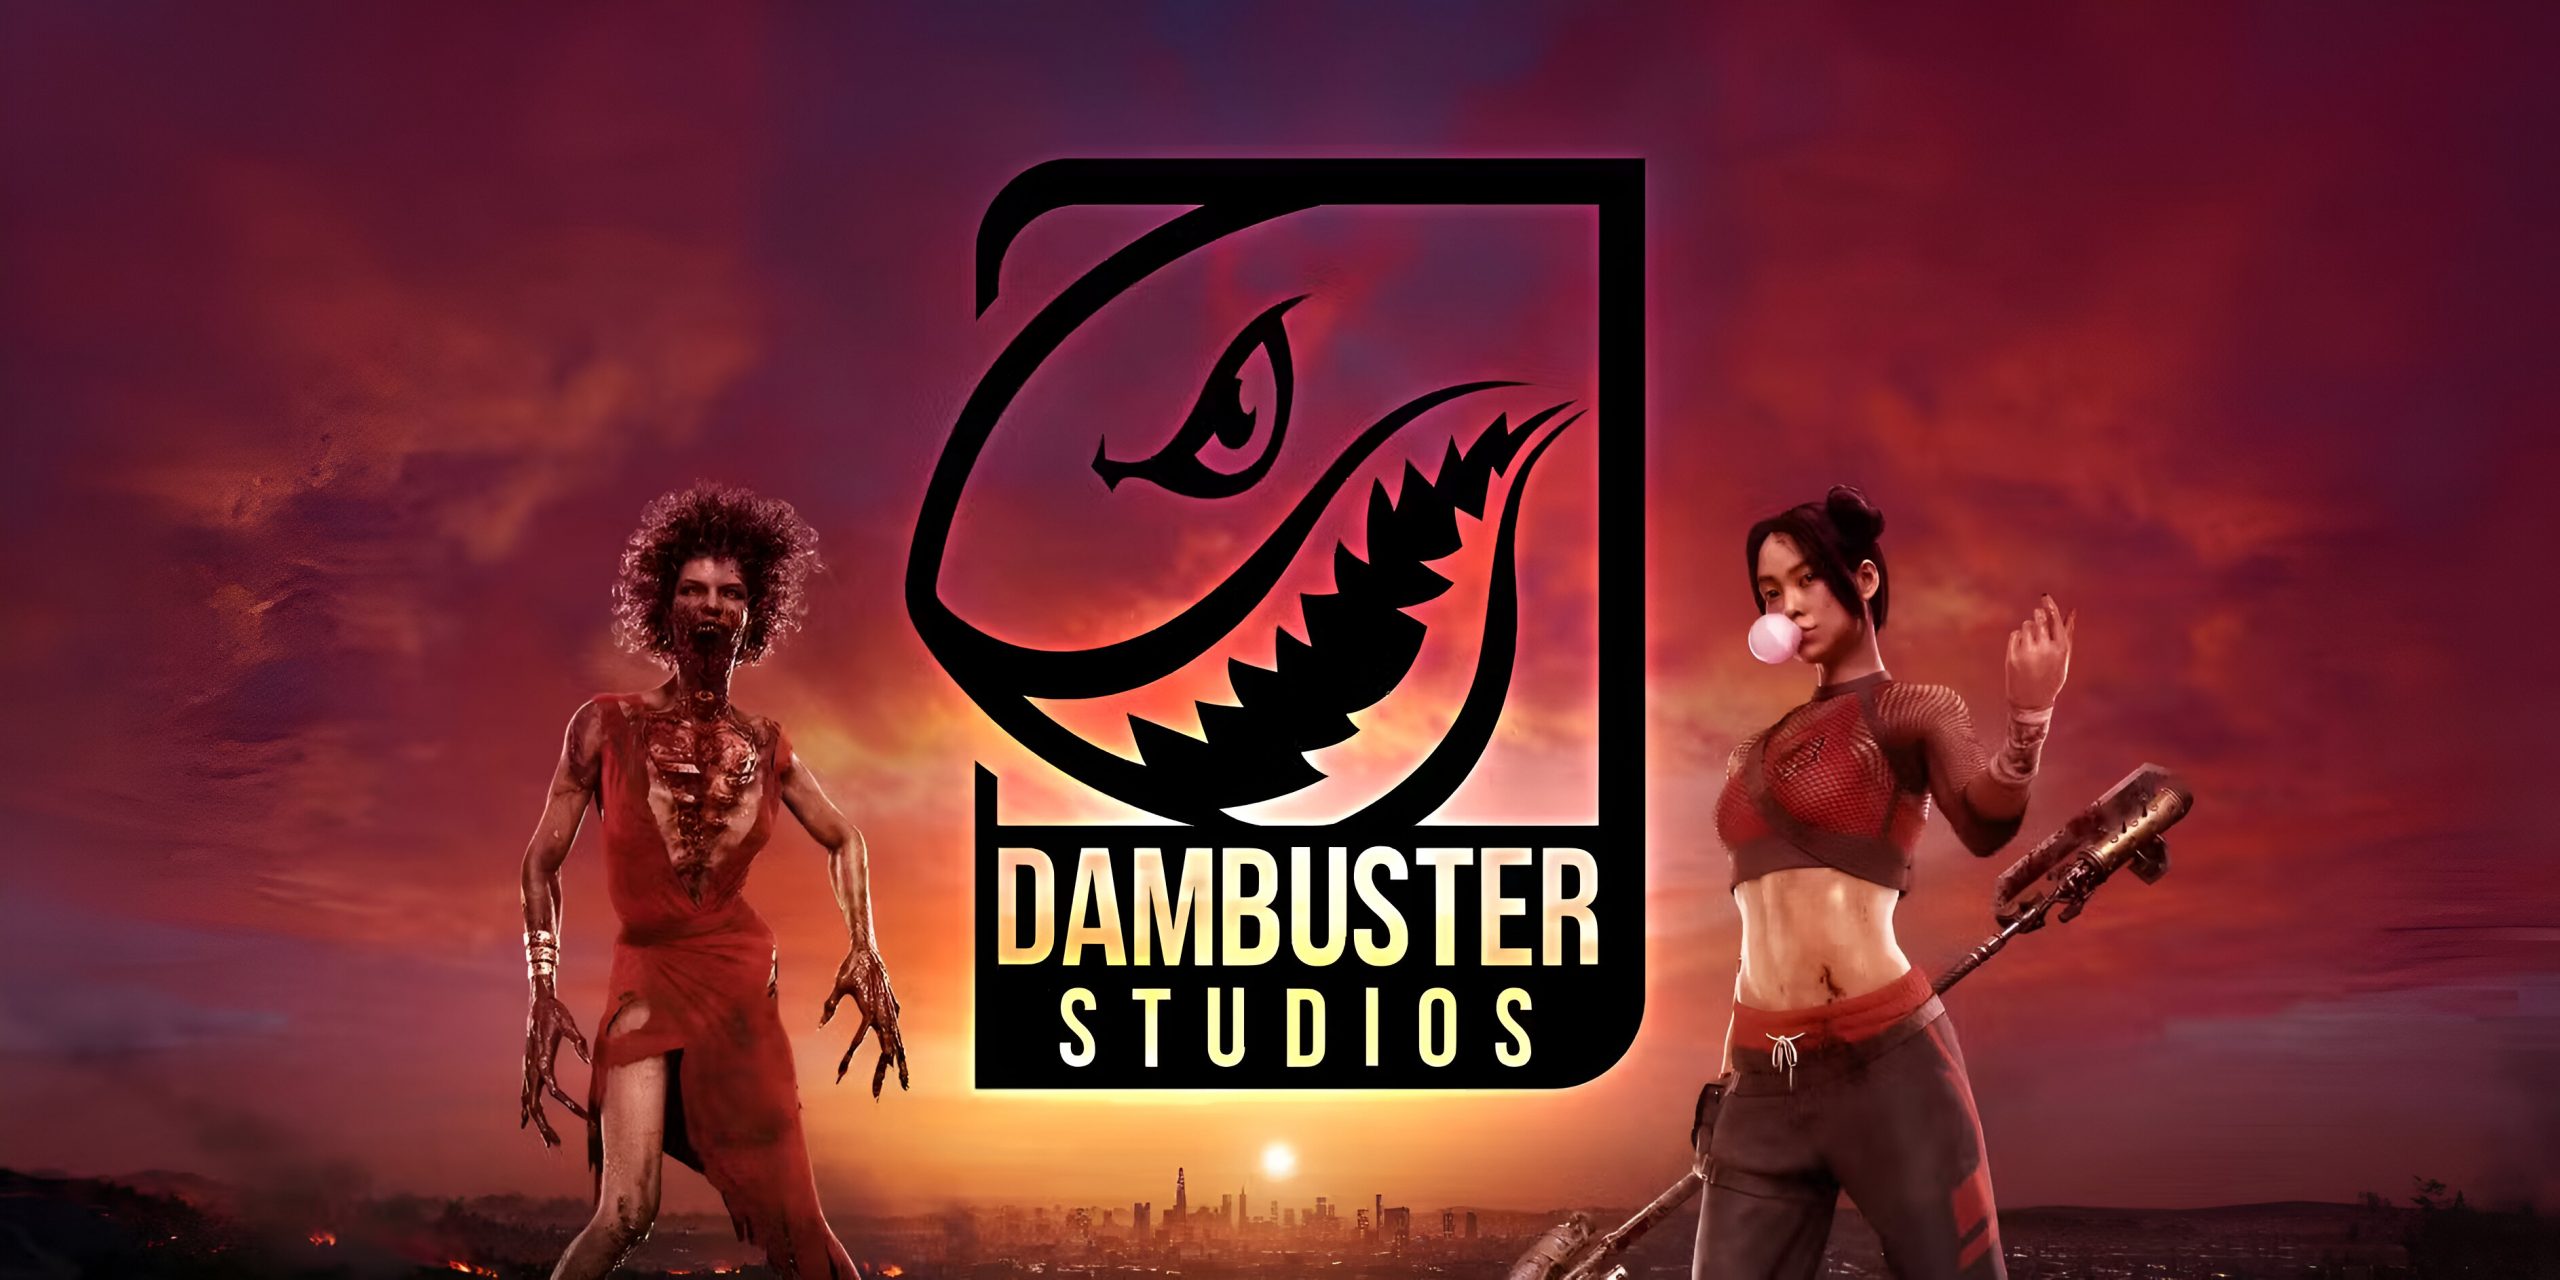 Dambuster Studios mang tin vui dành cho fan của Dead Island 2